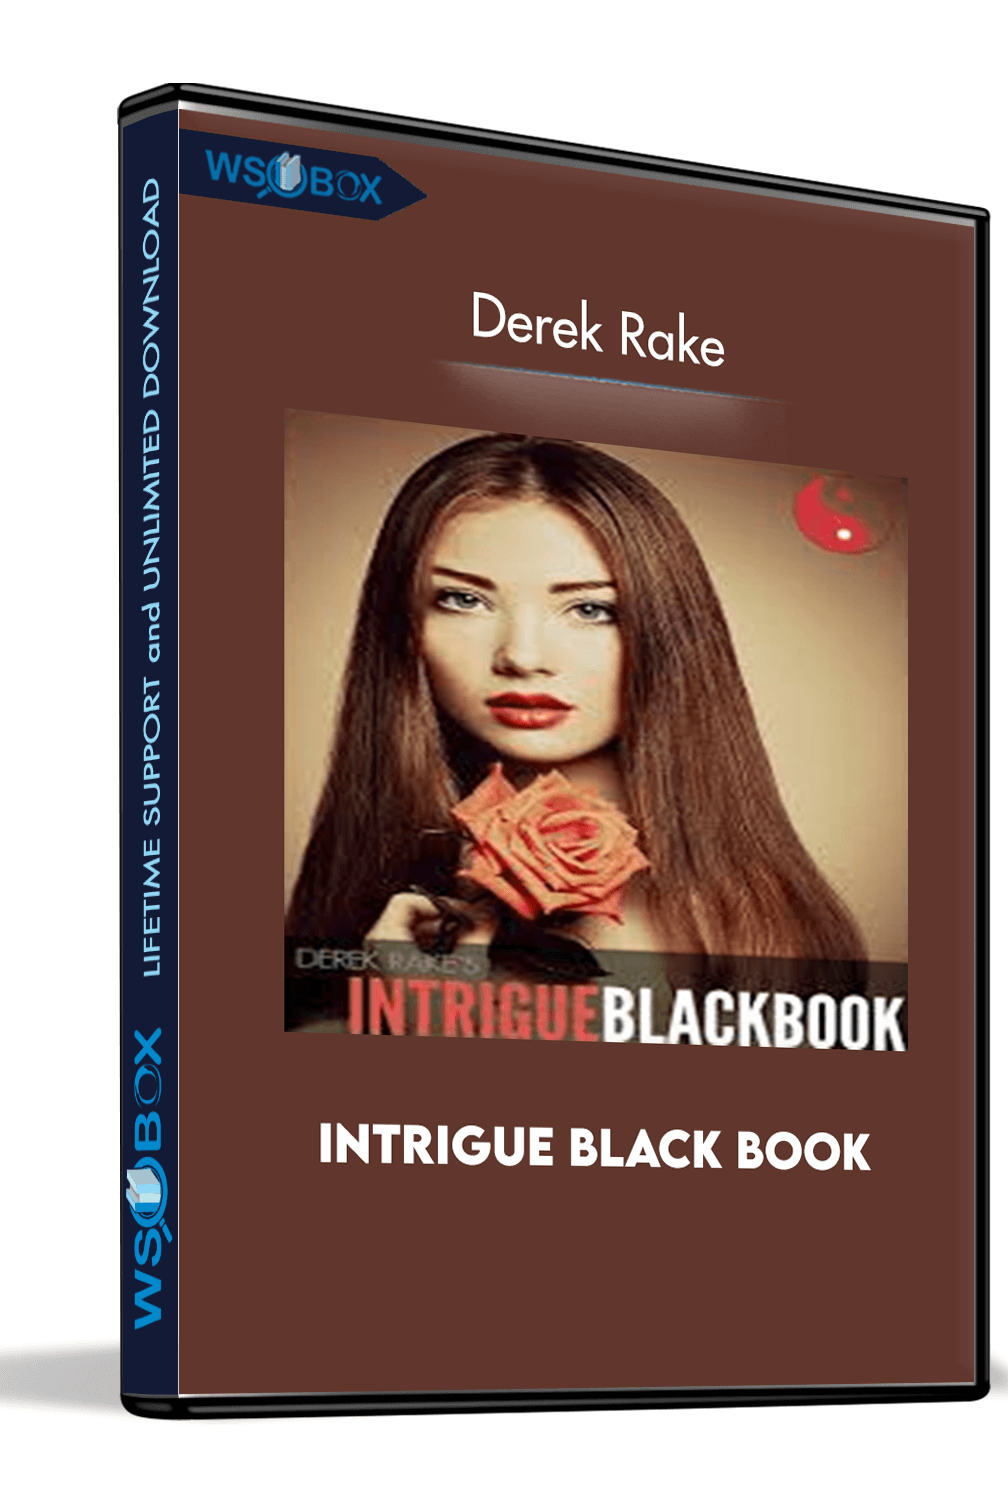 intrigue-black-book-derek-rake